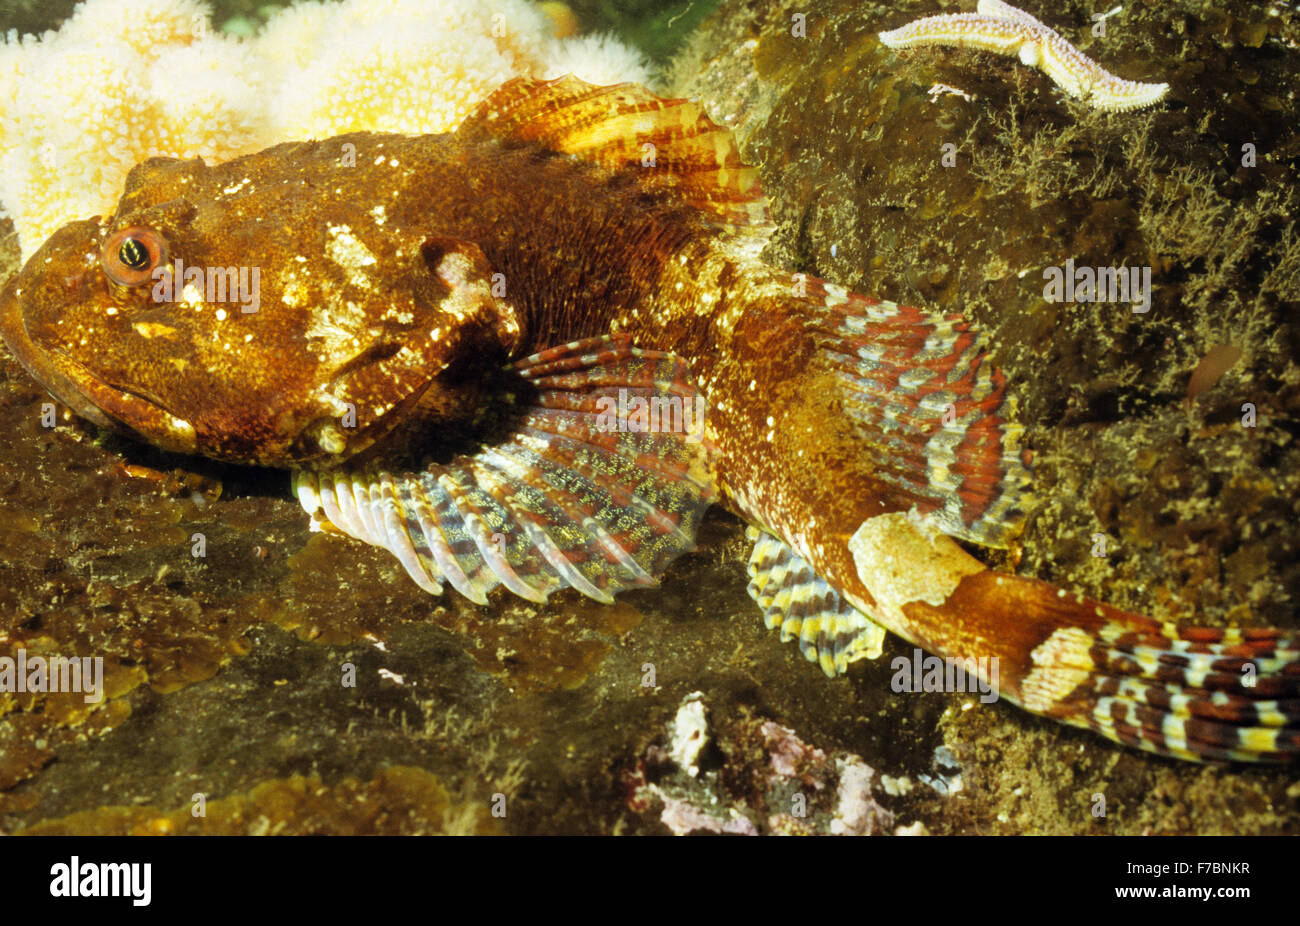 Amazing underwater marine life off the coast at St Abbs Scotland. Short spined sea scorpion. Stock Photo